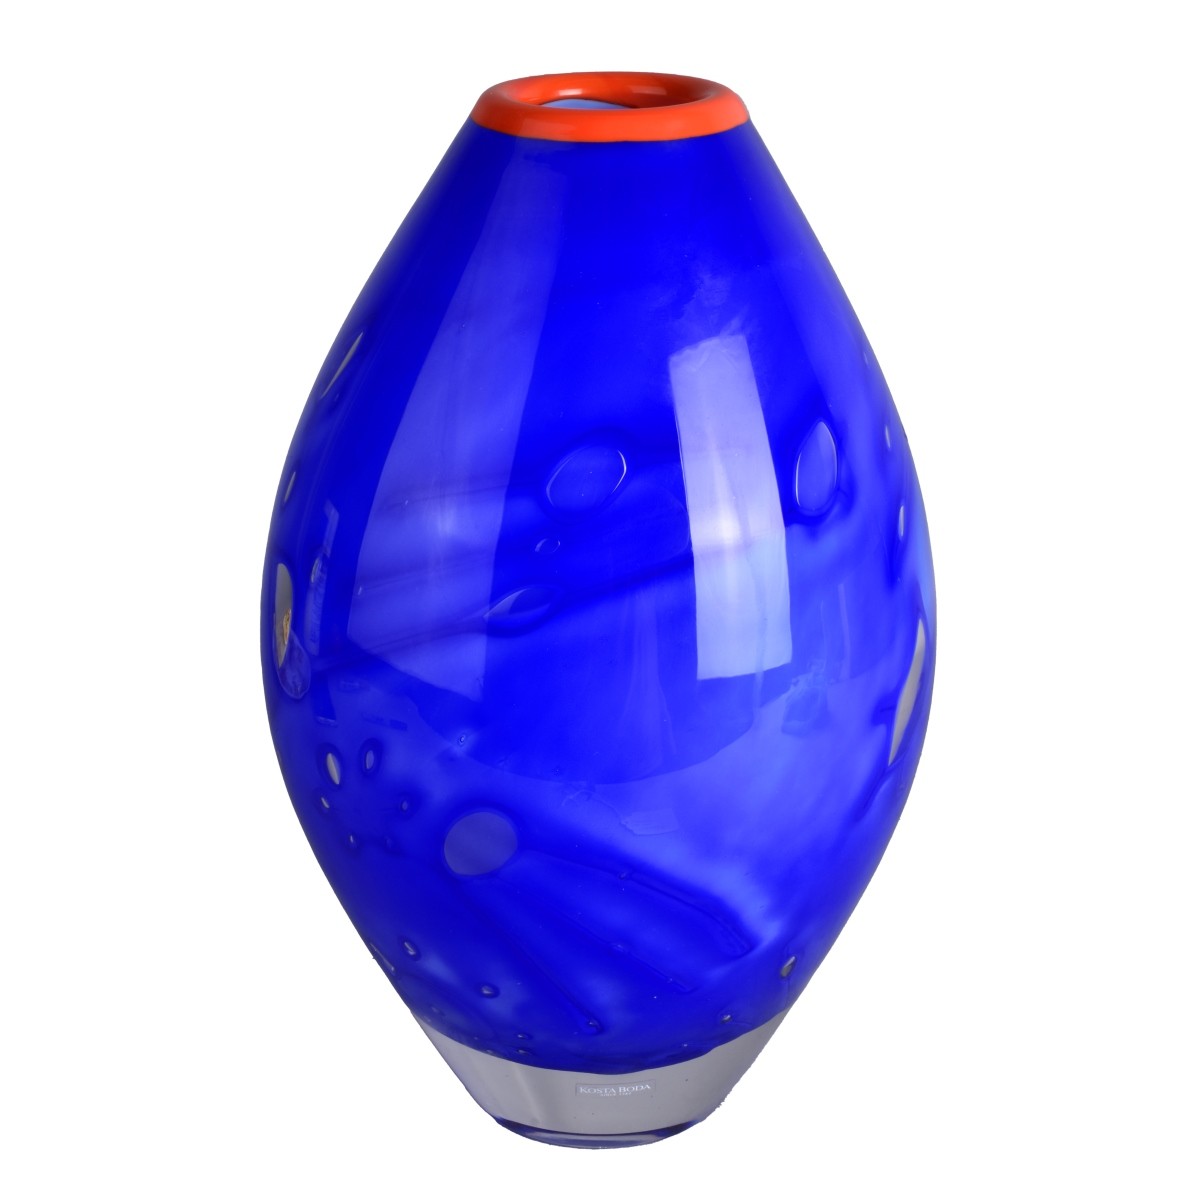 Kosta Boda Art Glass Vase